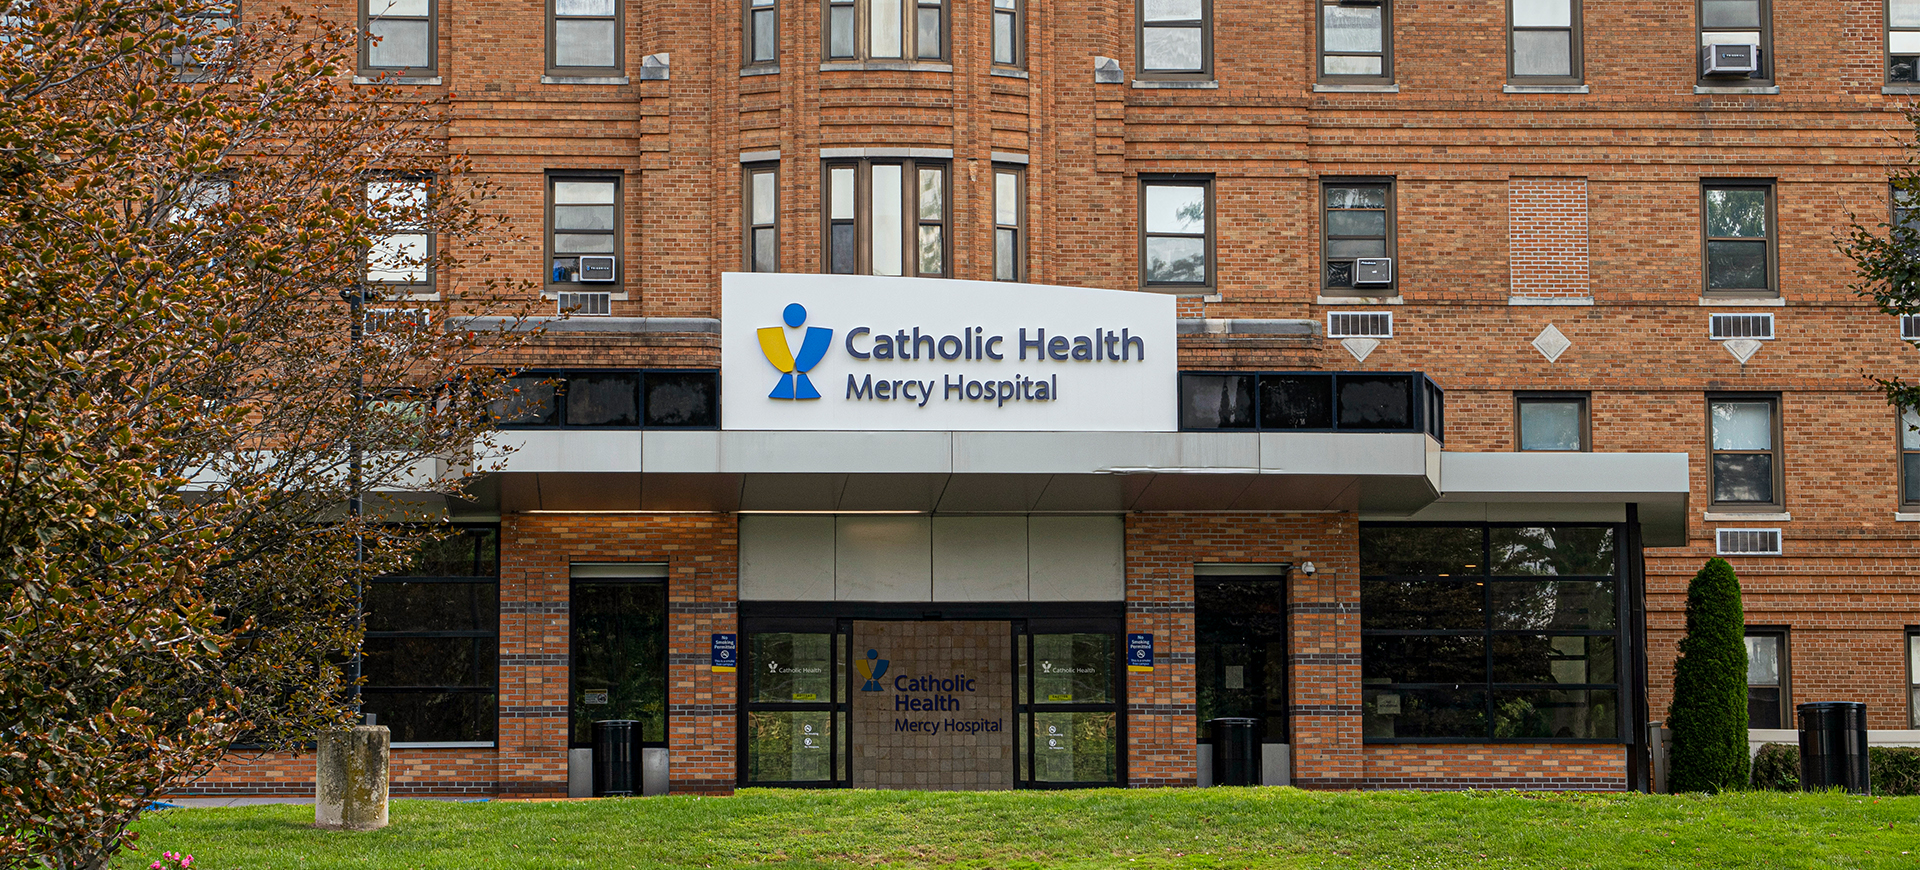       	        
	  	  Mercy Hospital Laboratory
	  	  
	        